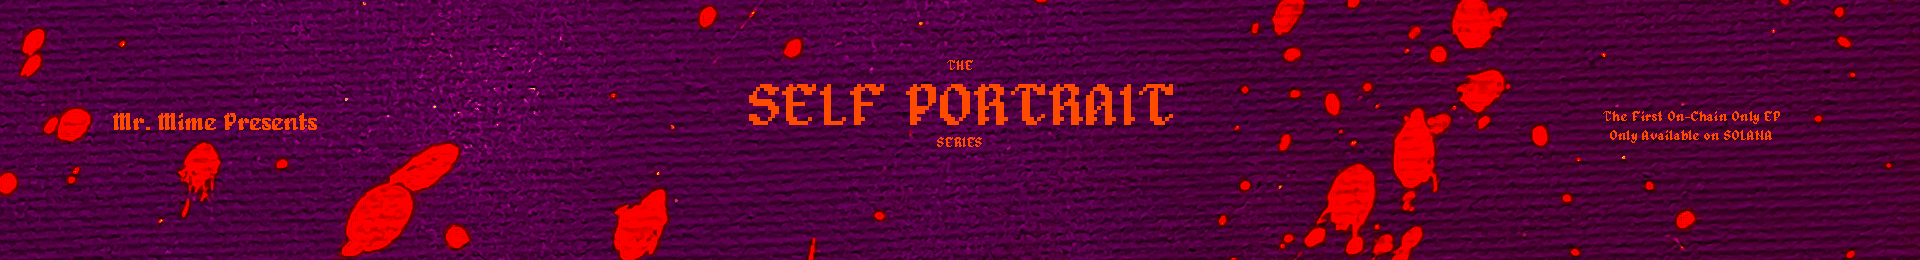 SELF PORTRAIT banner